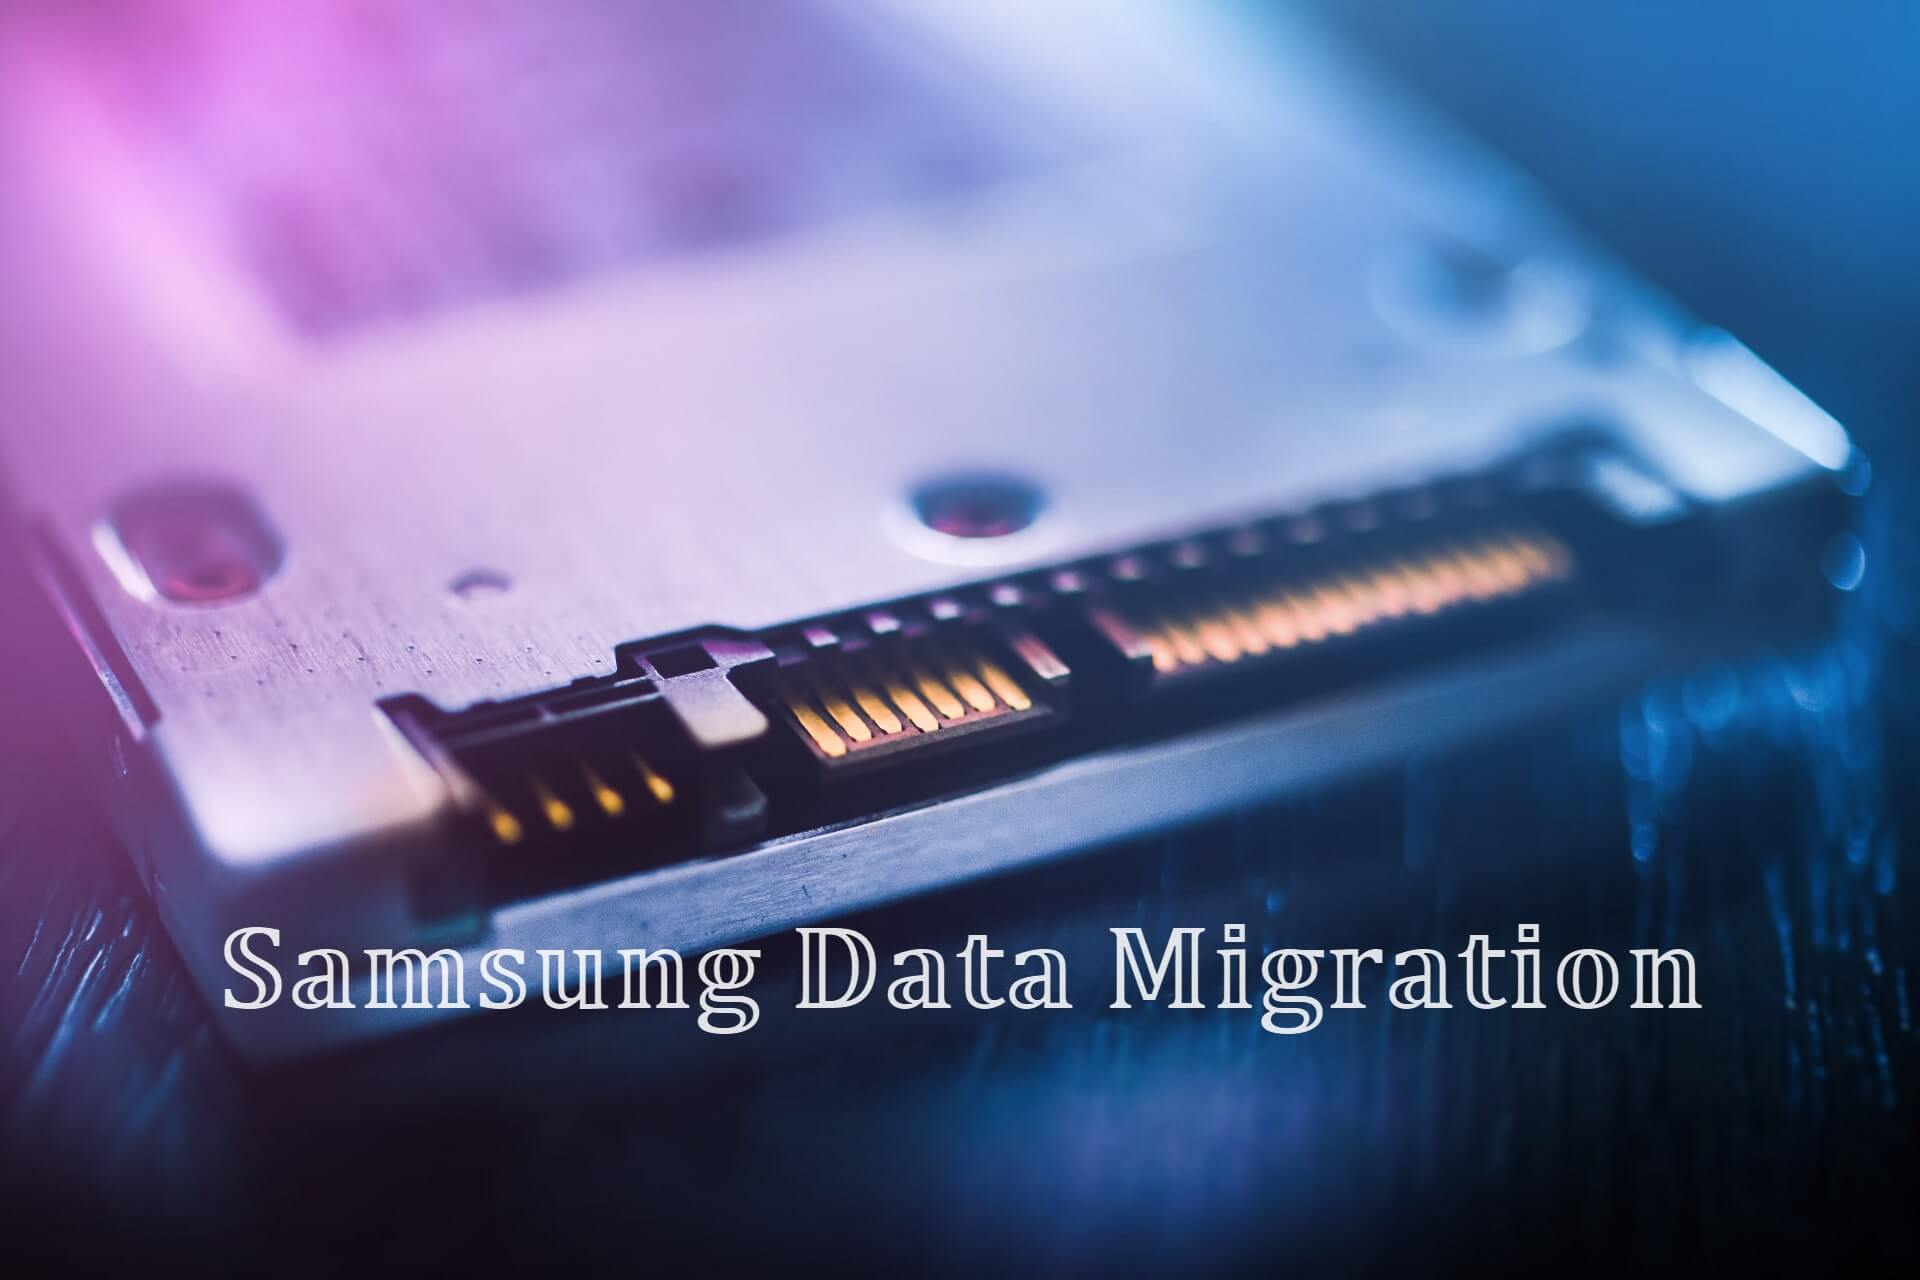 samsung data migration windows 7